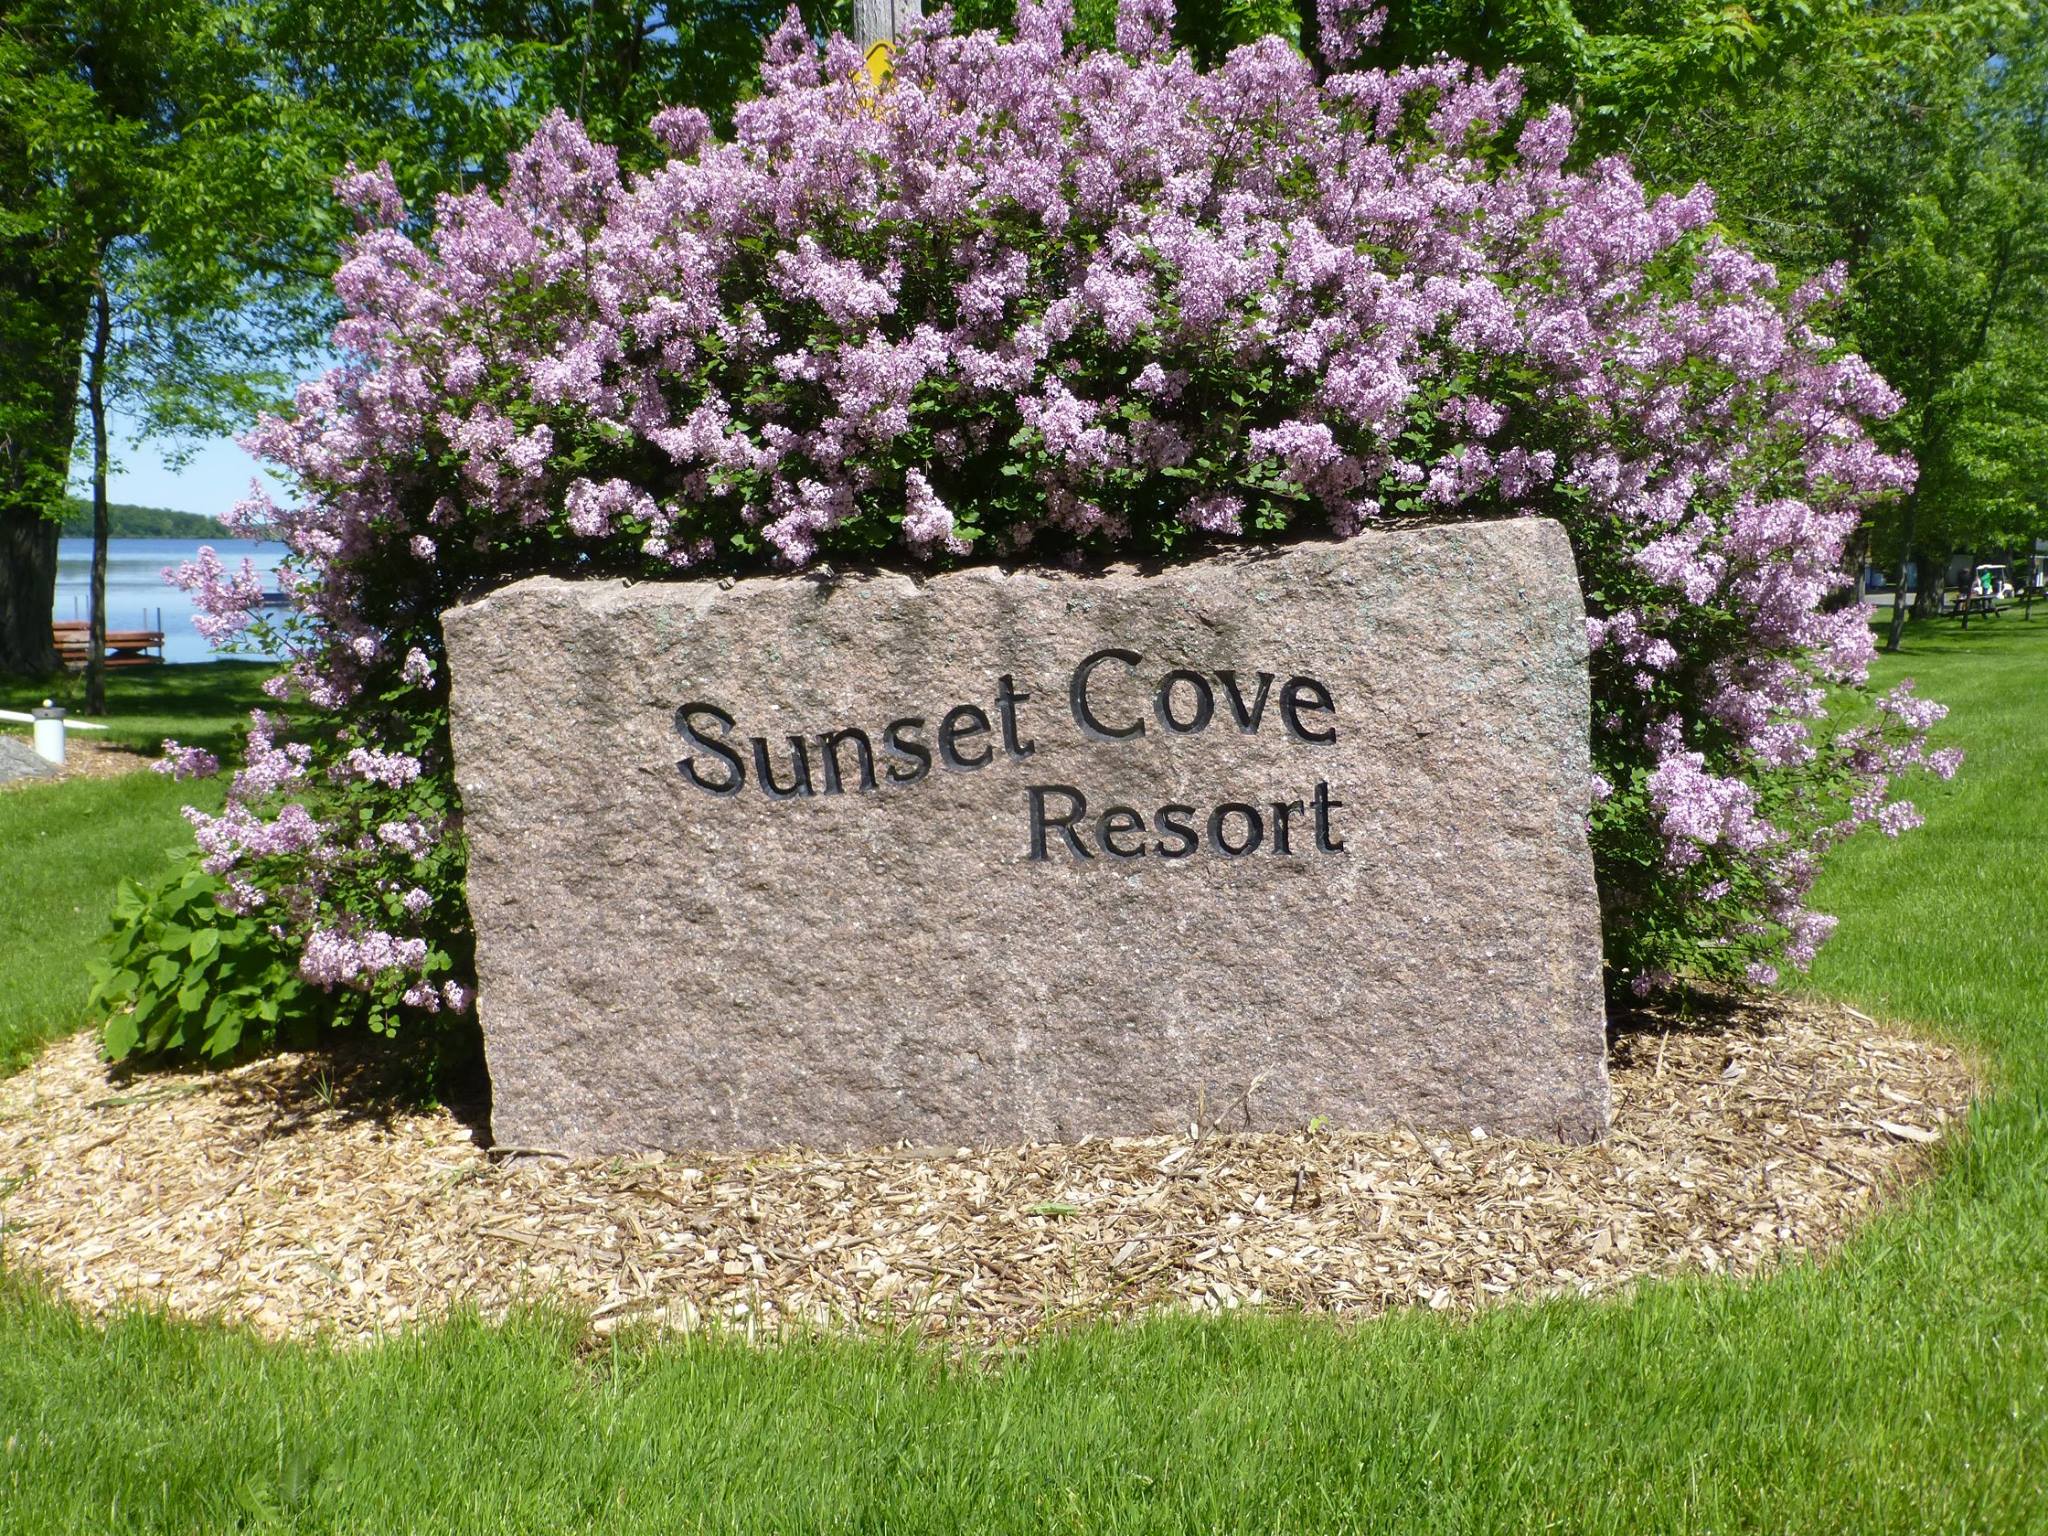 Sunset Cove Resort Stone Name Plate